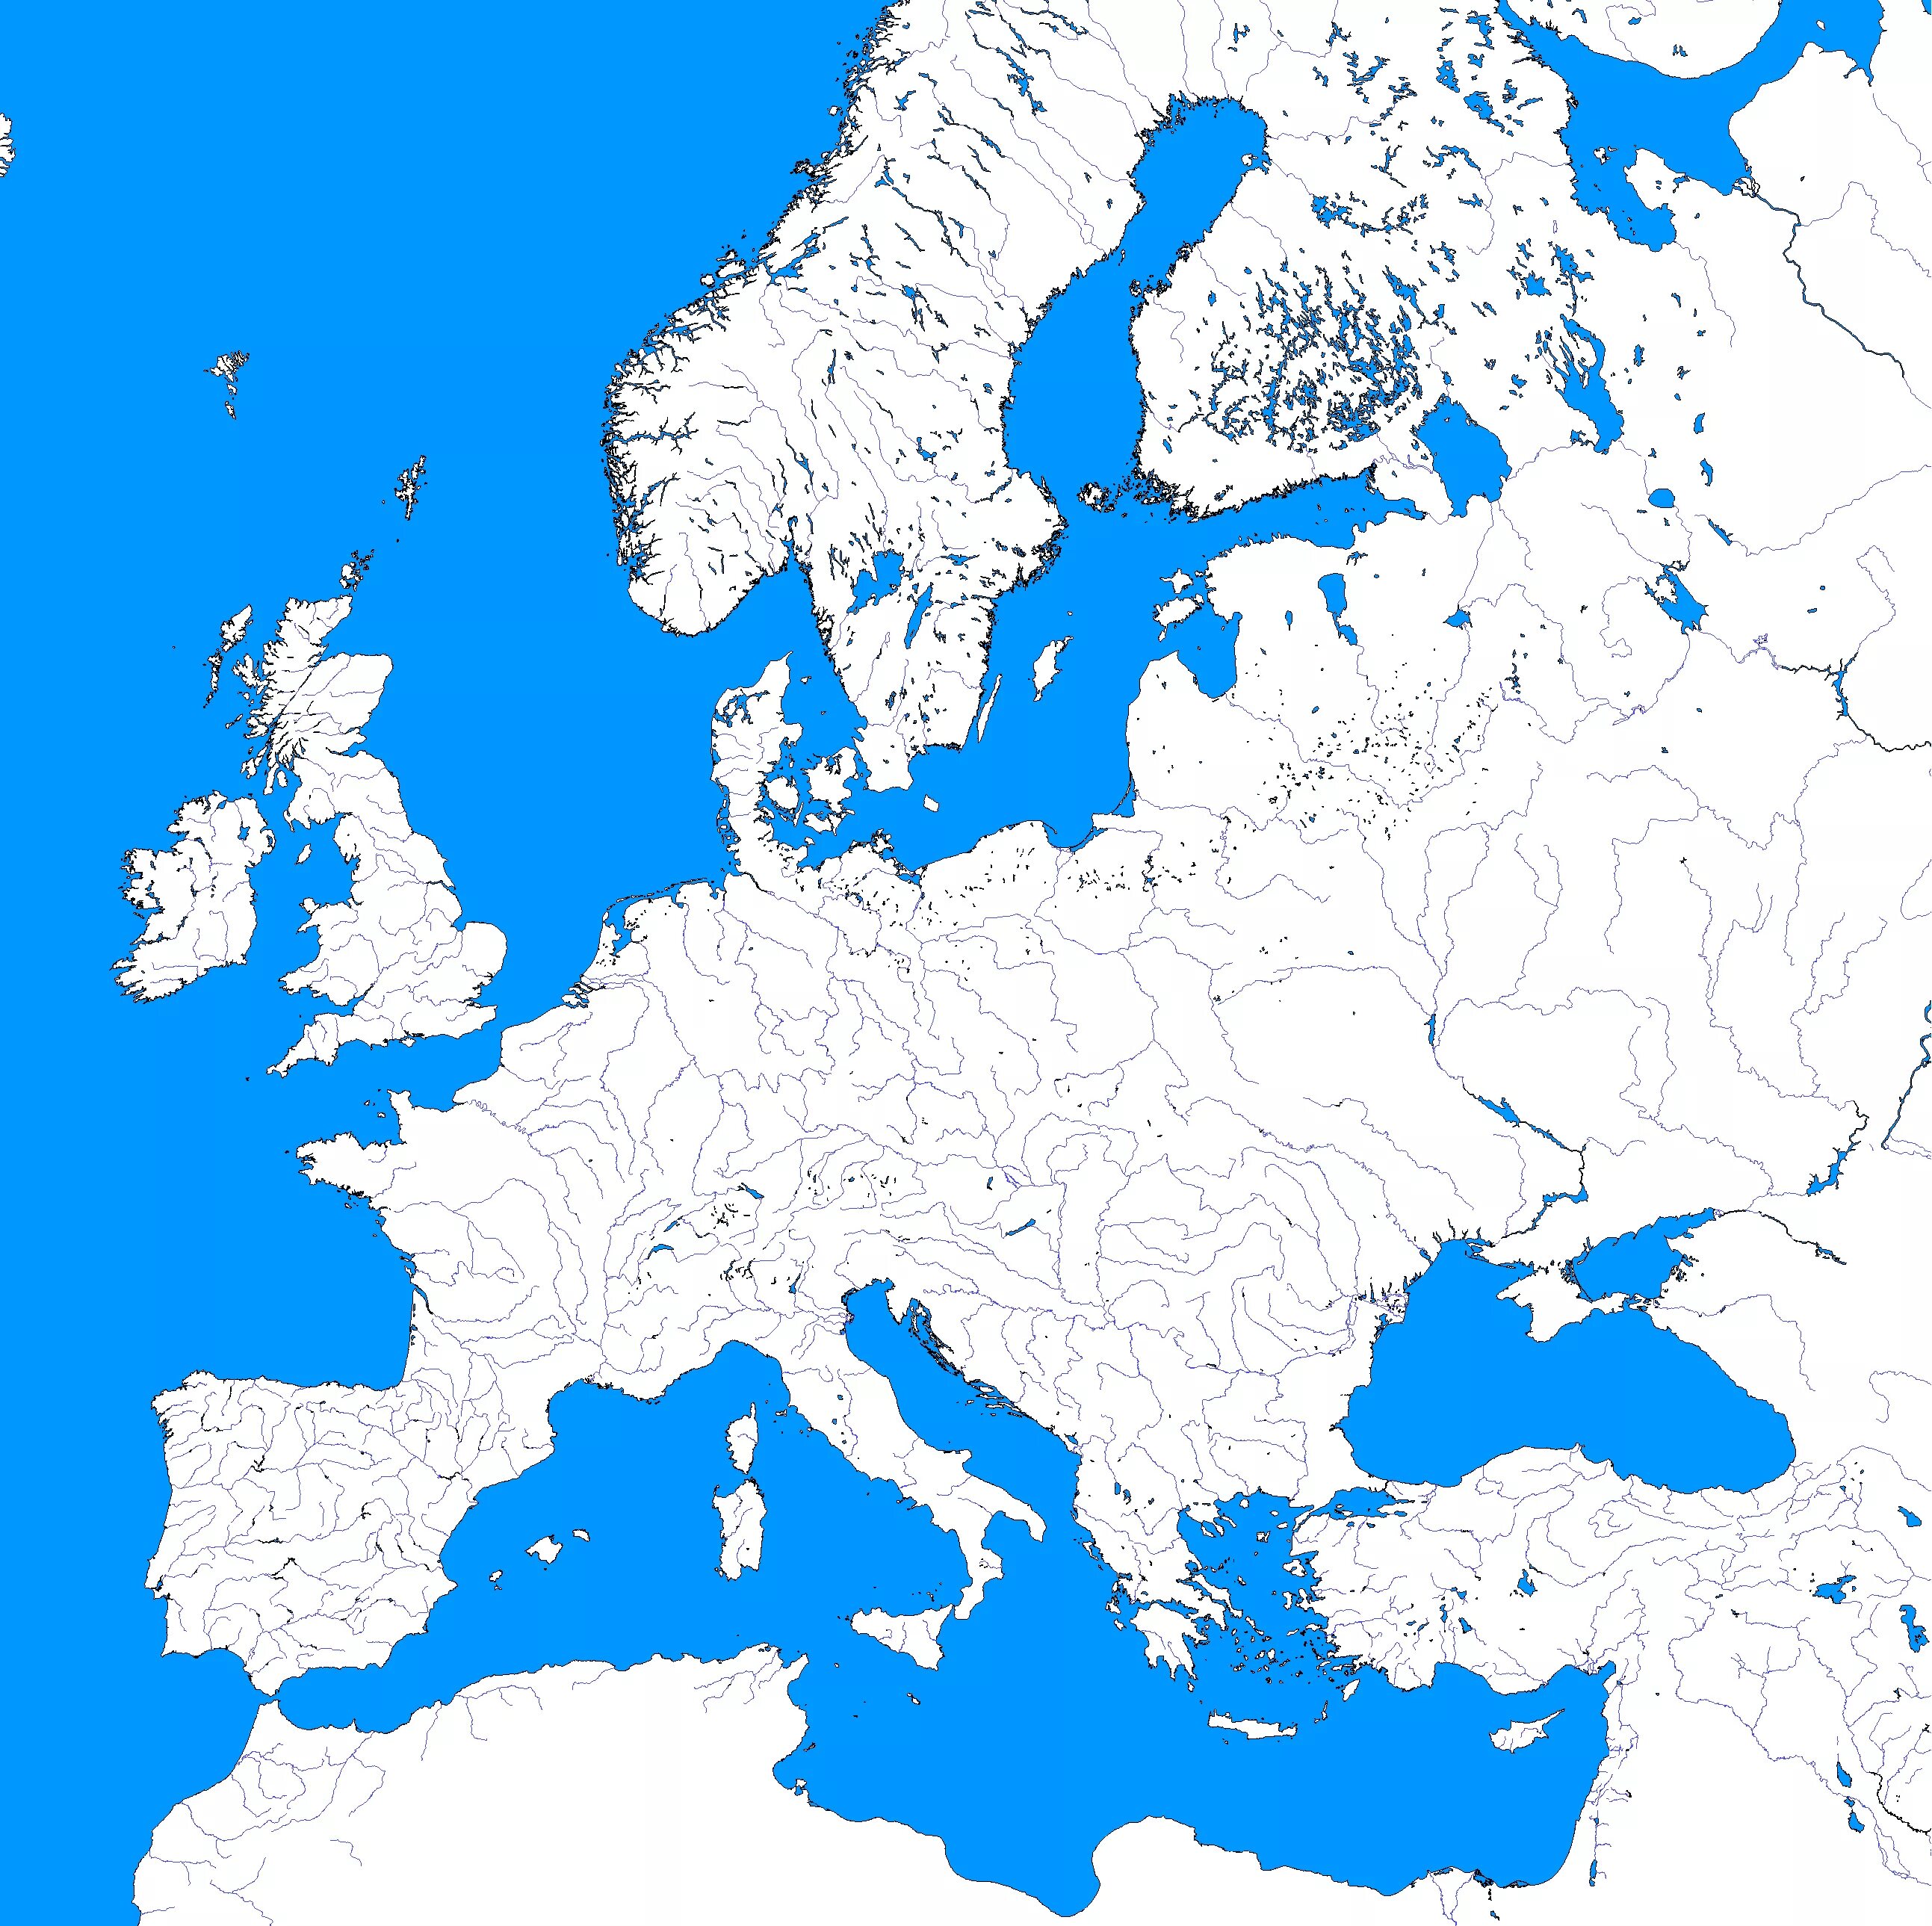 Maps for mapping. Blank Map of Europe. Карта Европы для маппинга. Карта Европы без границ. Карта Европы без стран.